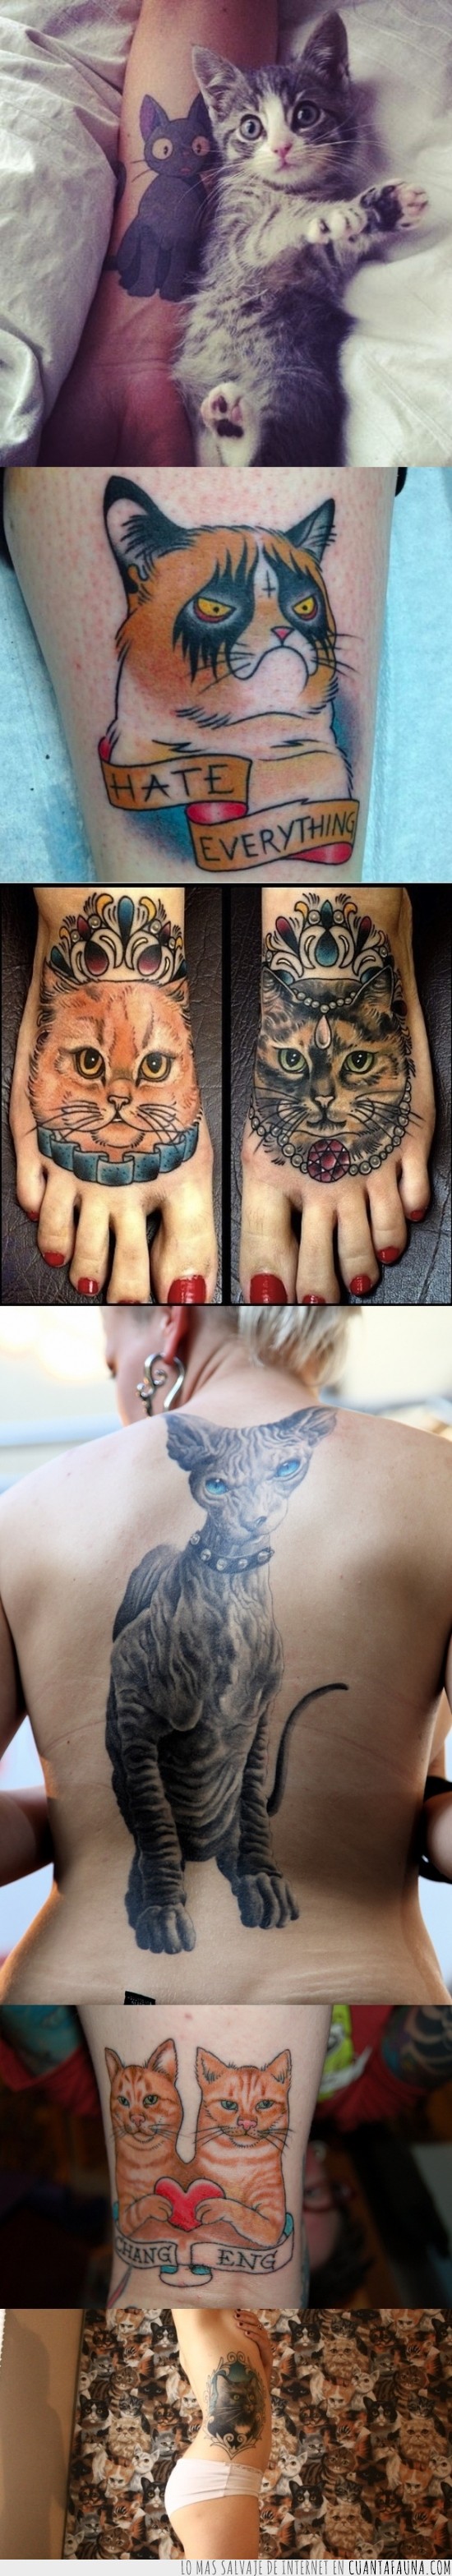 tatuajes,gatos,cuerpo,tattoos,obsesion